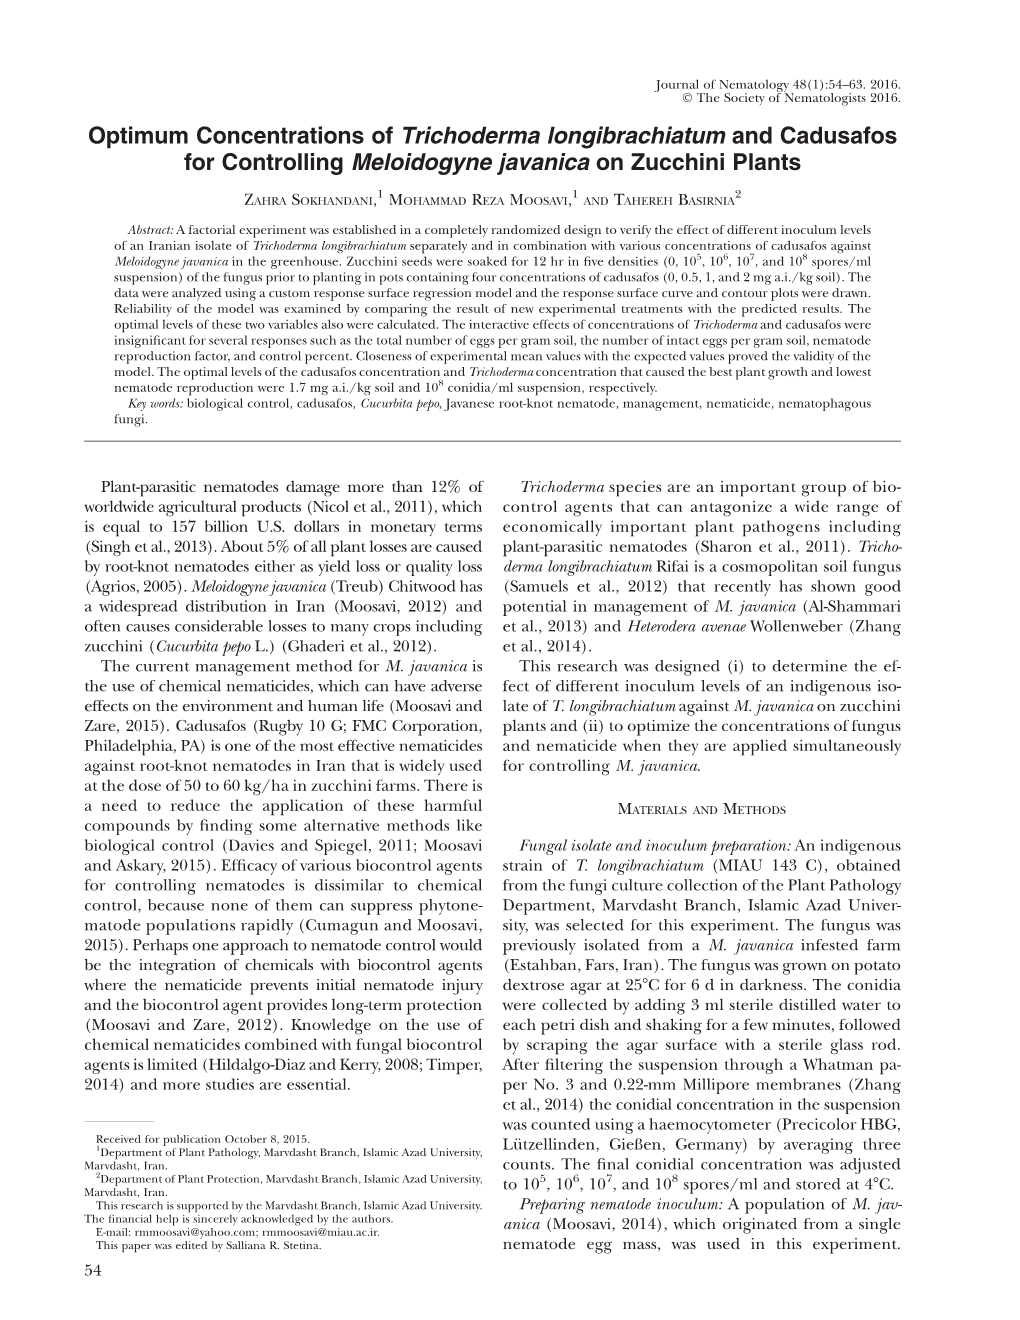 Optimum Concentrations of Trichoderma Longibrachiatum and Cadusafos for Controlling Meloidogyne Javanica on Zucchini Plants